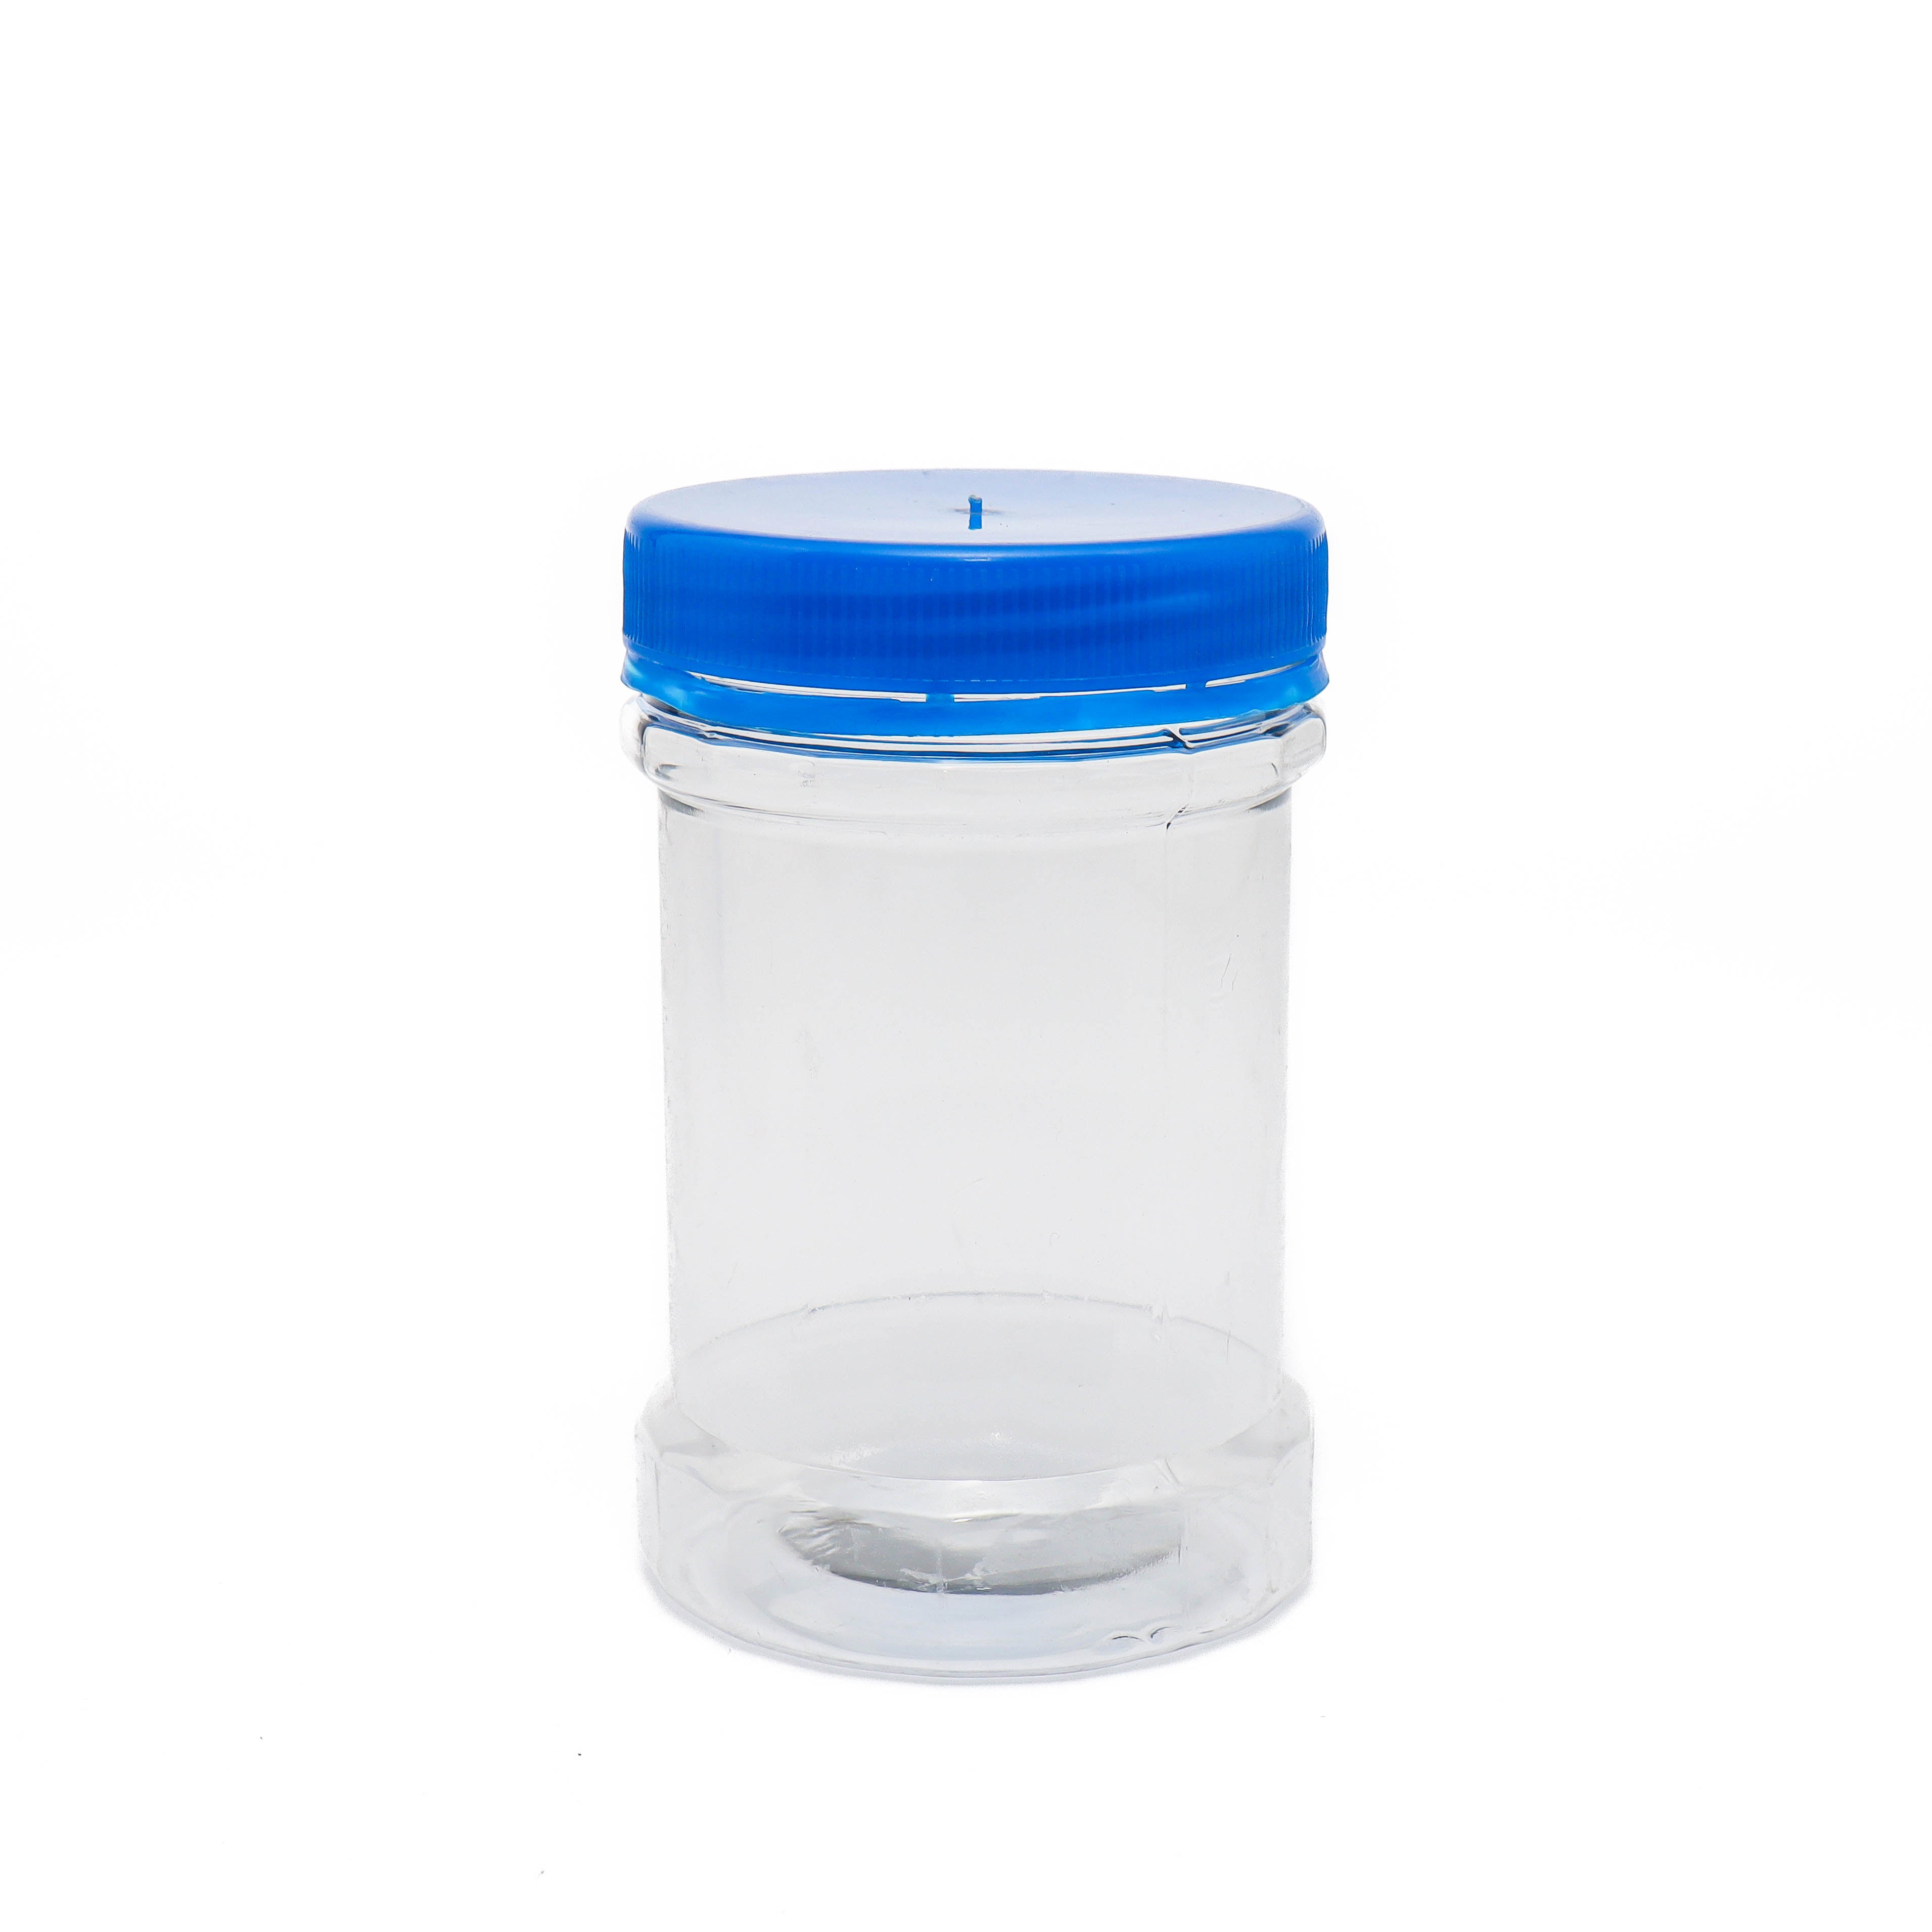 375ml Plastic Storage Jar Round with Blue Lid